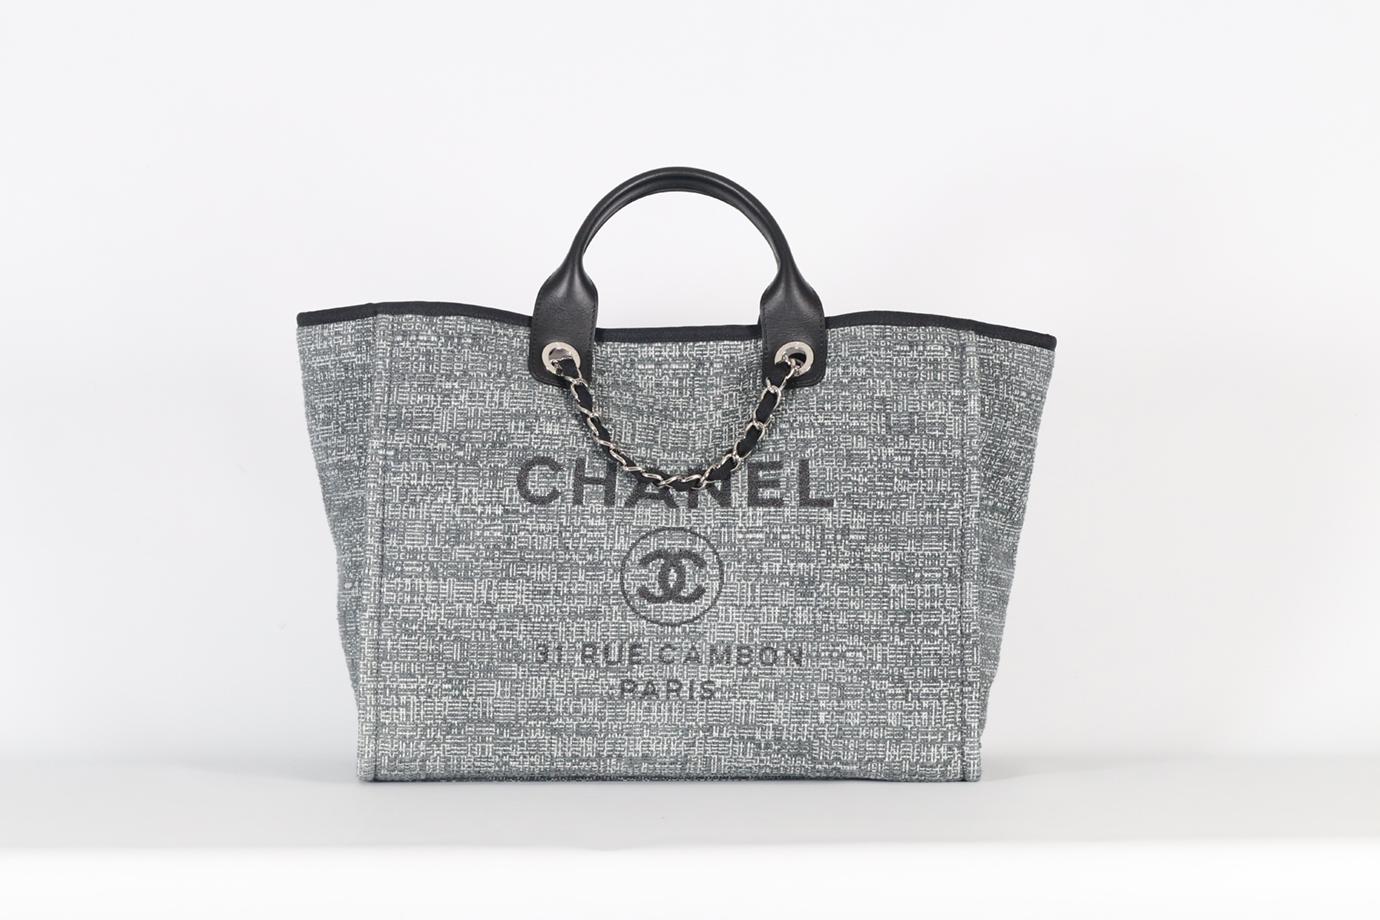 <ul>
<li>Chanel 2018 Deauville Medium Raffia And Leather Tote Bag.</li>
<li>Grey and black.</li>
<li>Magnetic fastening - Top.</li>
<li>Does not come with - Authenticity card, dustbag or box.</li>
<li><strong>Model: